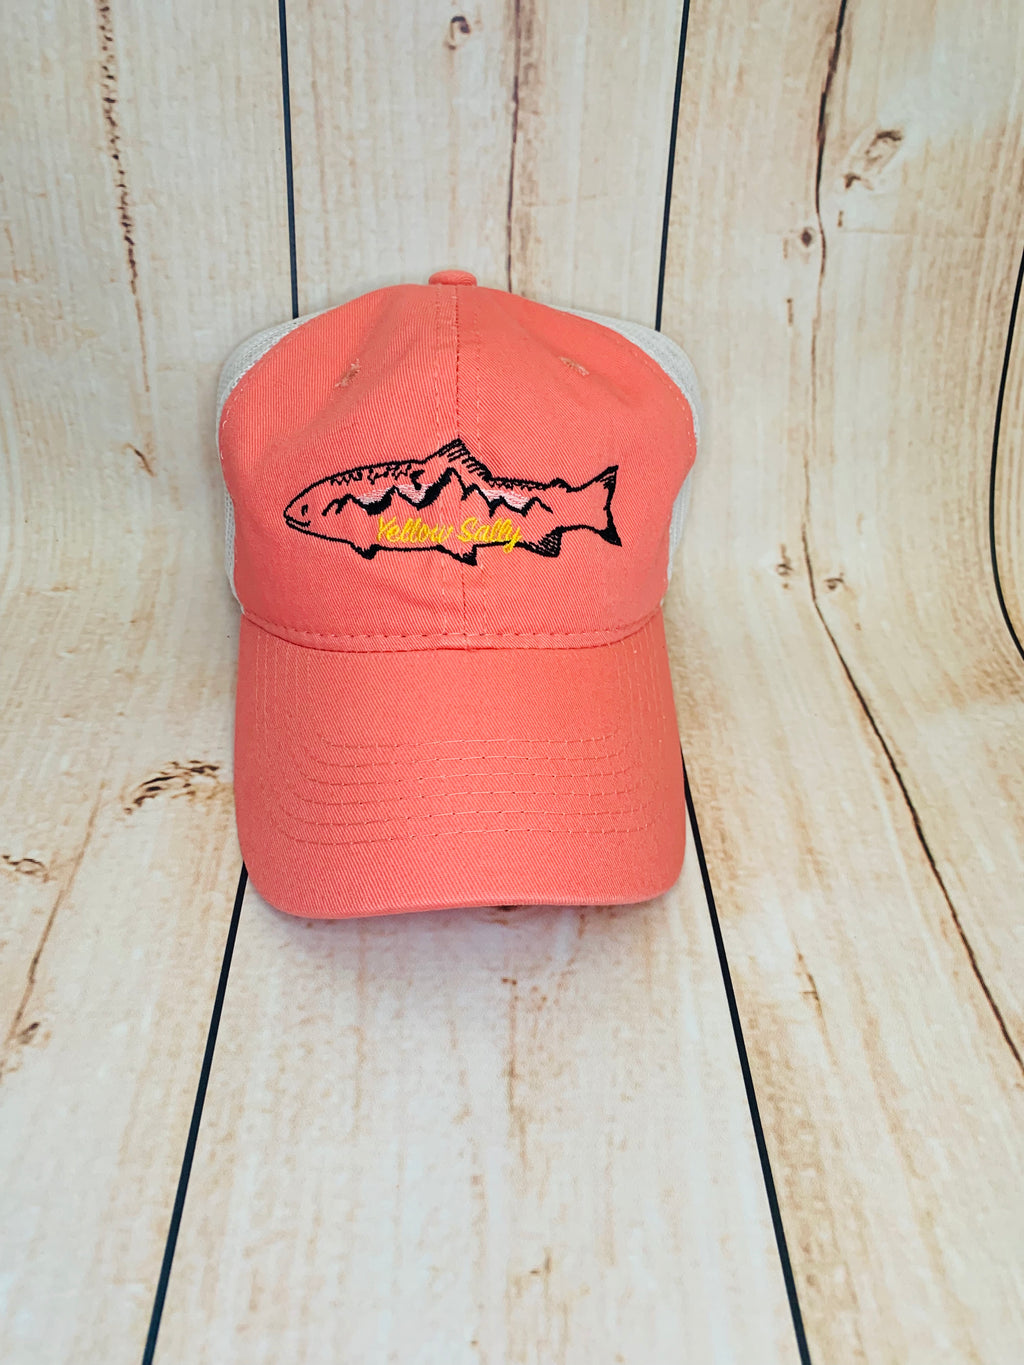 Cute fishing hat